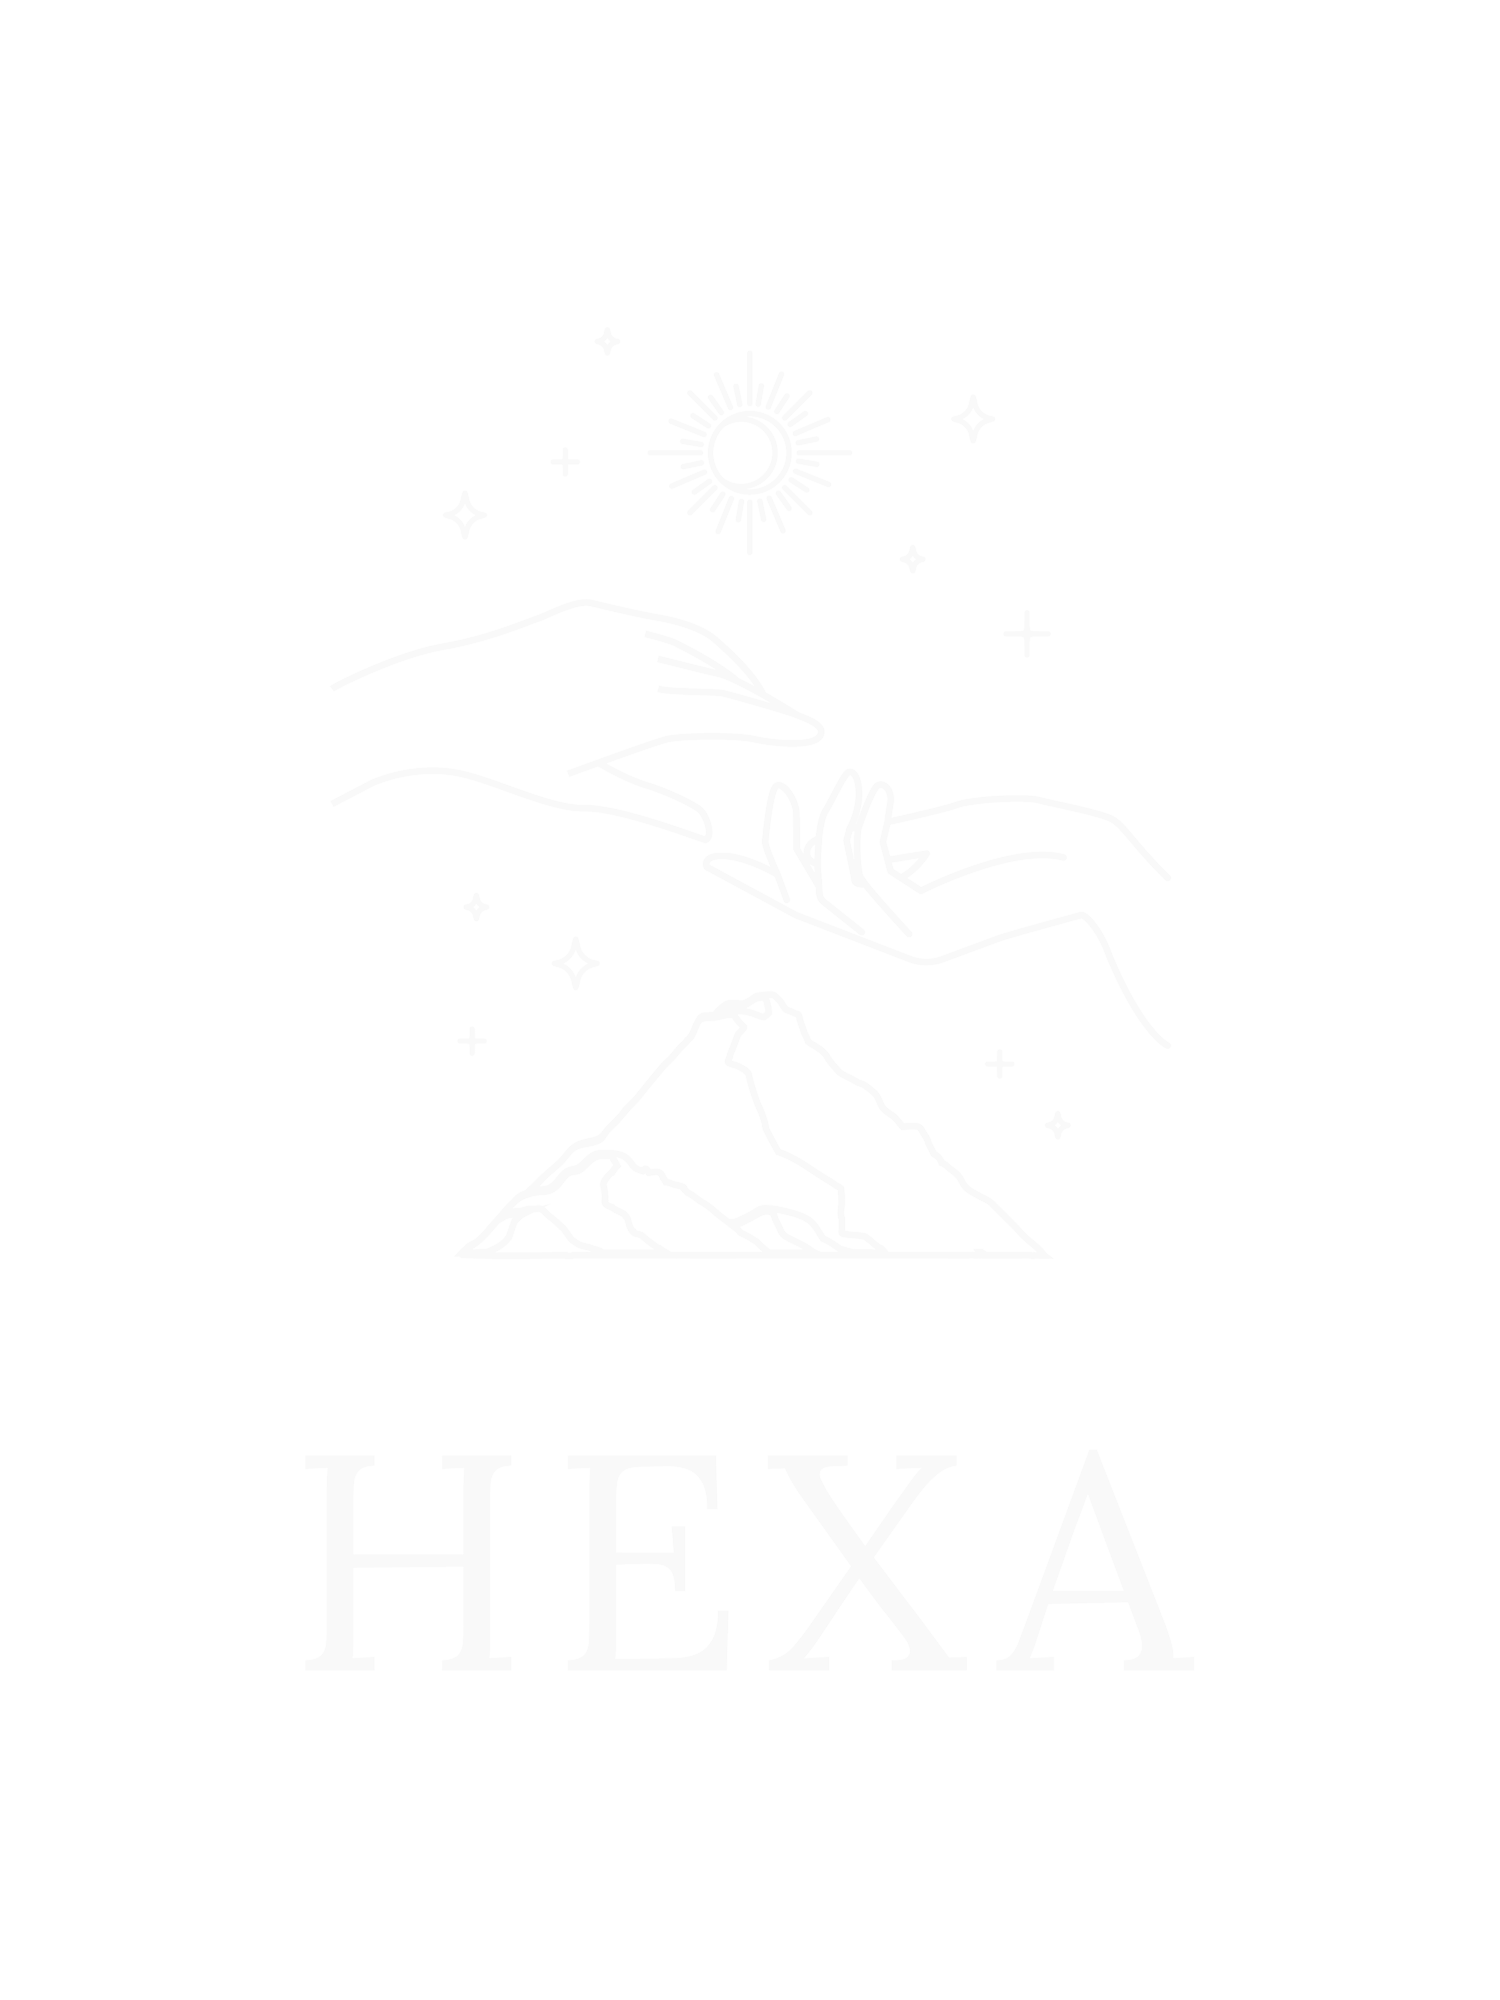 Hexa Photography